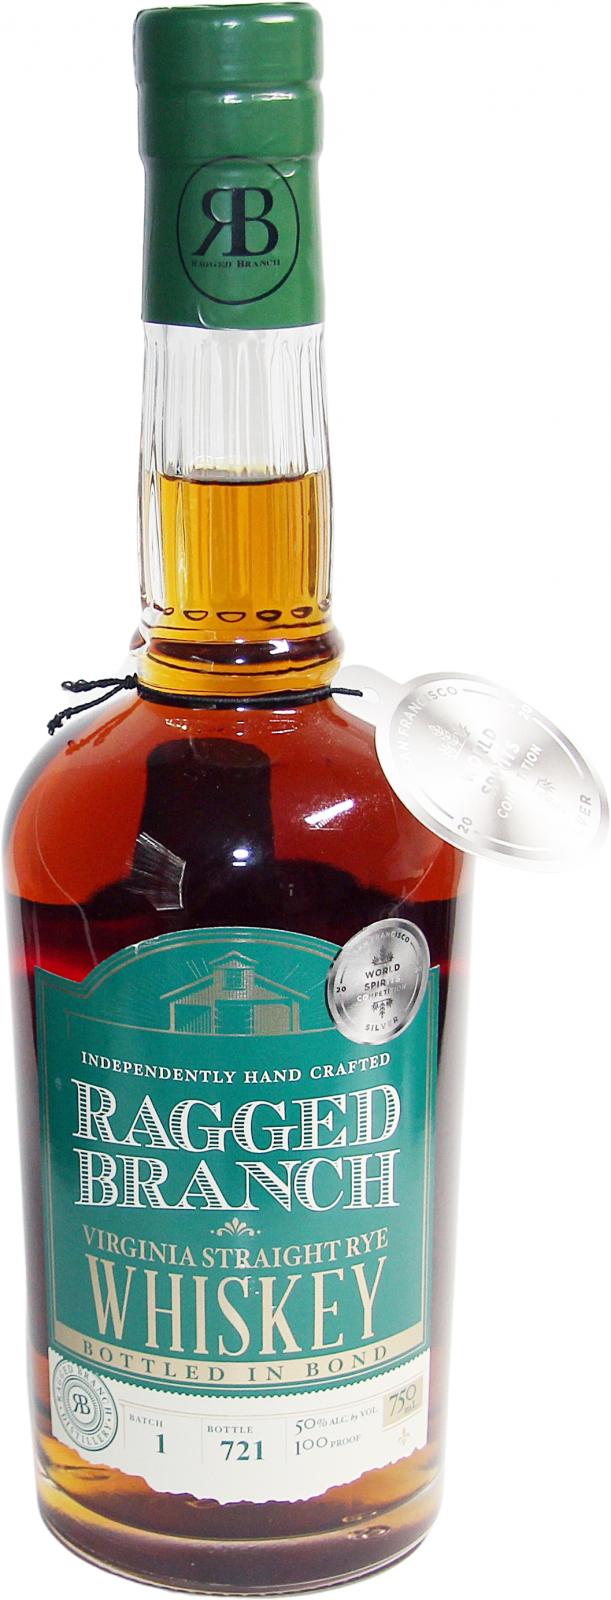 Ragged Branch Virginia Straight Rye Whisky Bottled in Bond Batch 1 50% 750ml